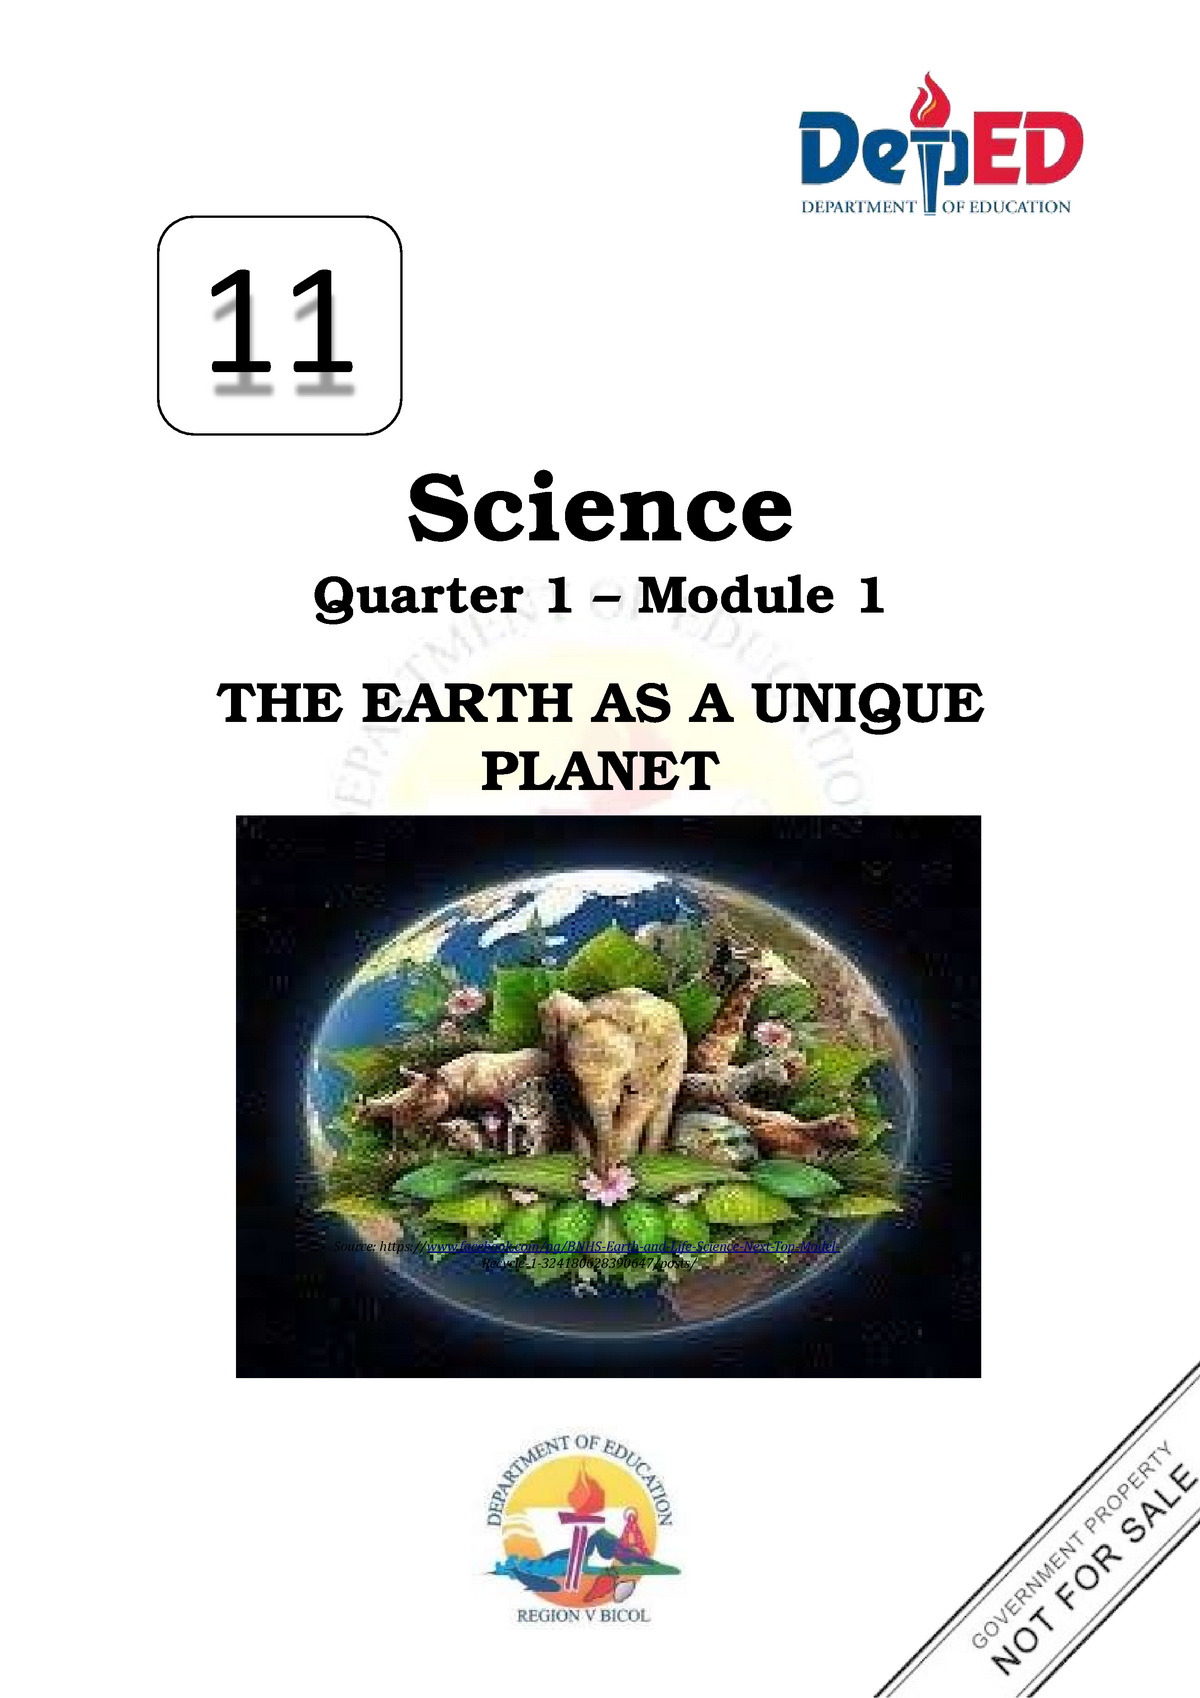 1 Core Subject Science 11 Earth Life Science Q1 Module 1183fjjjkfdds Fgjjds Dgjj Fhjjyff 8537